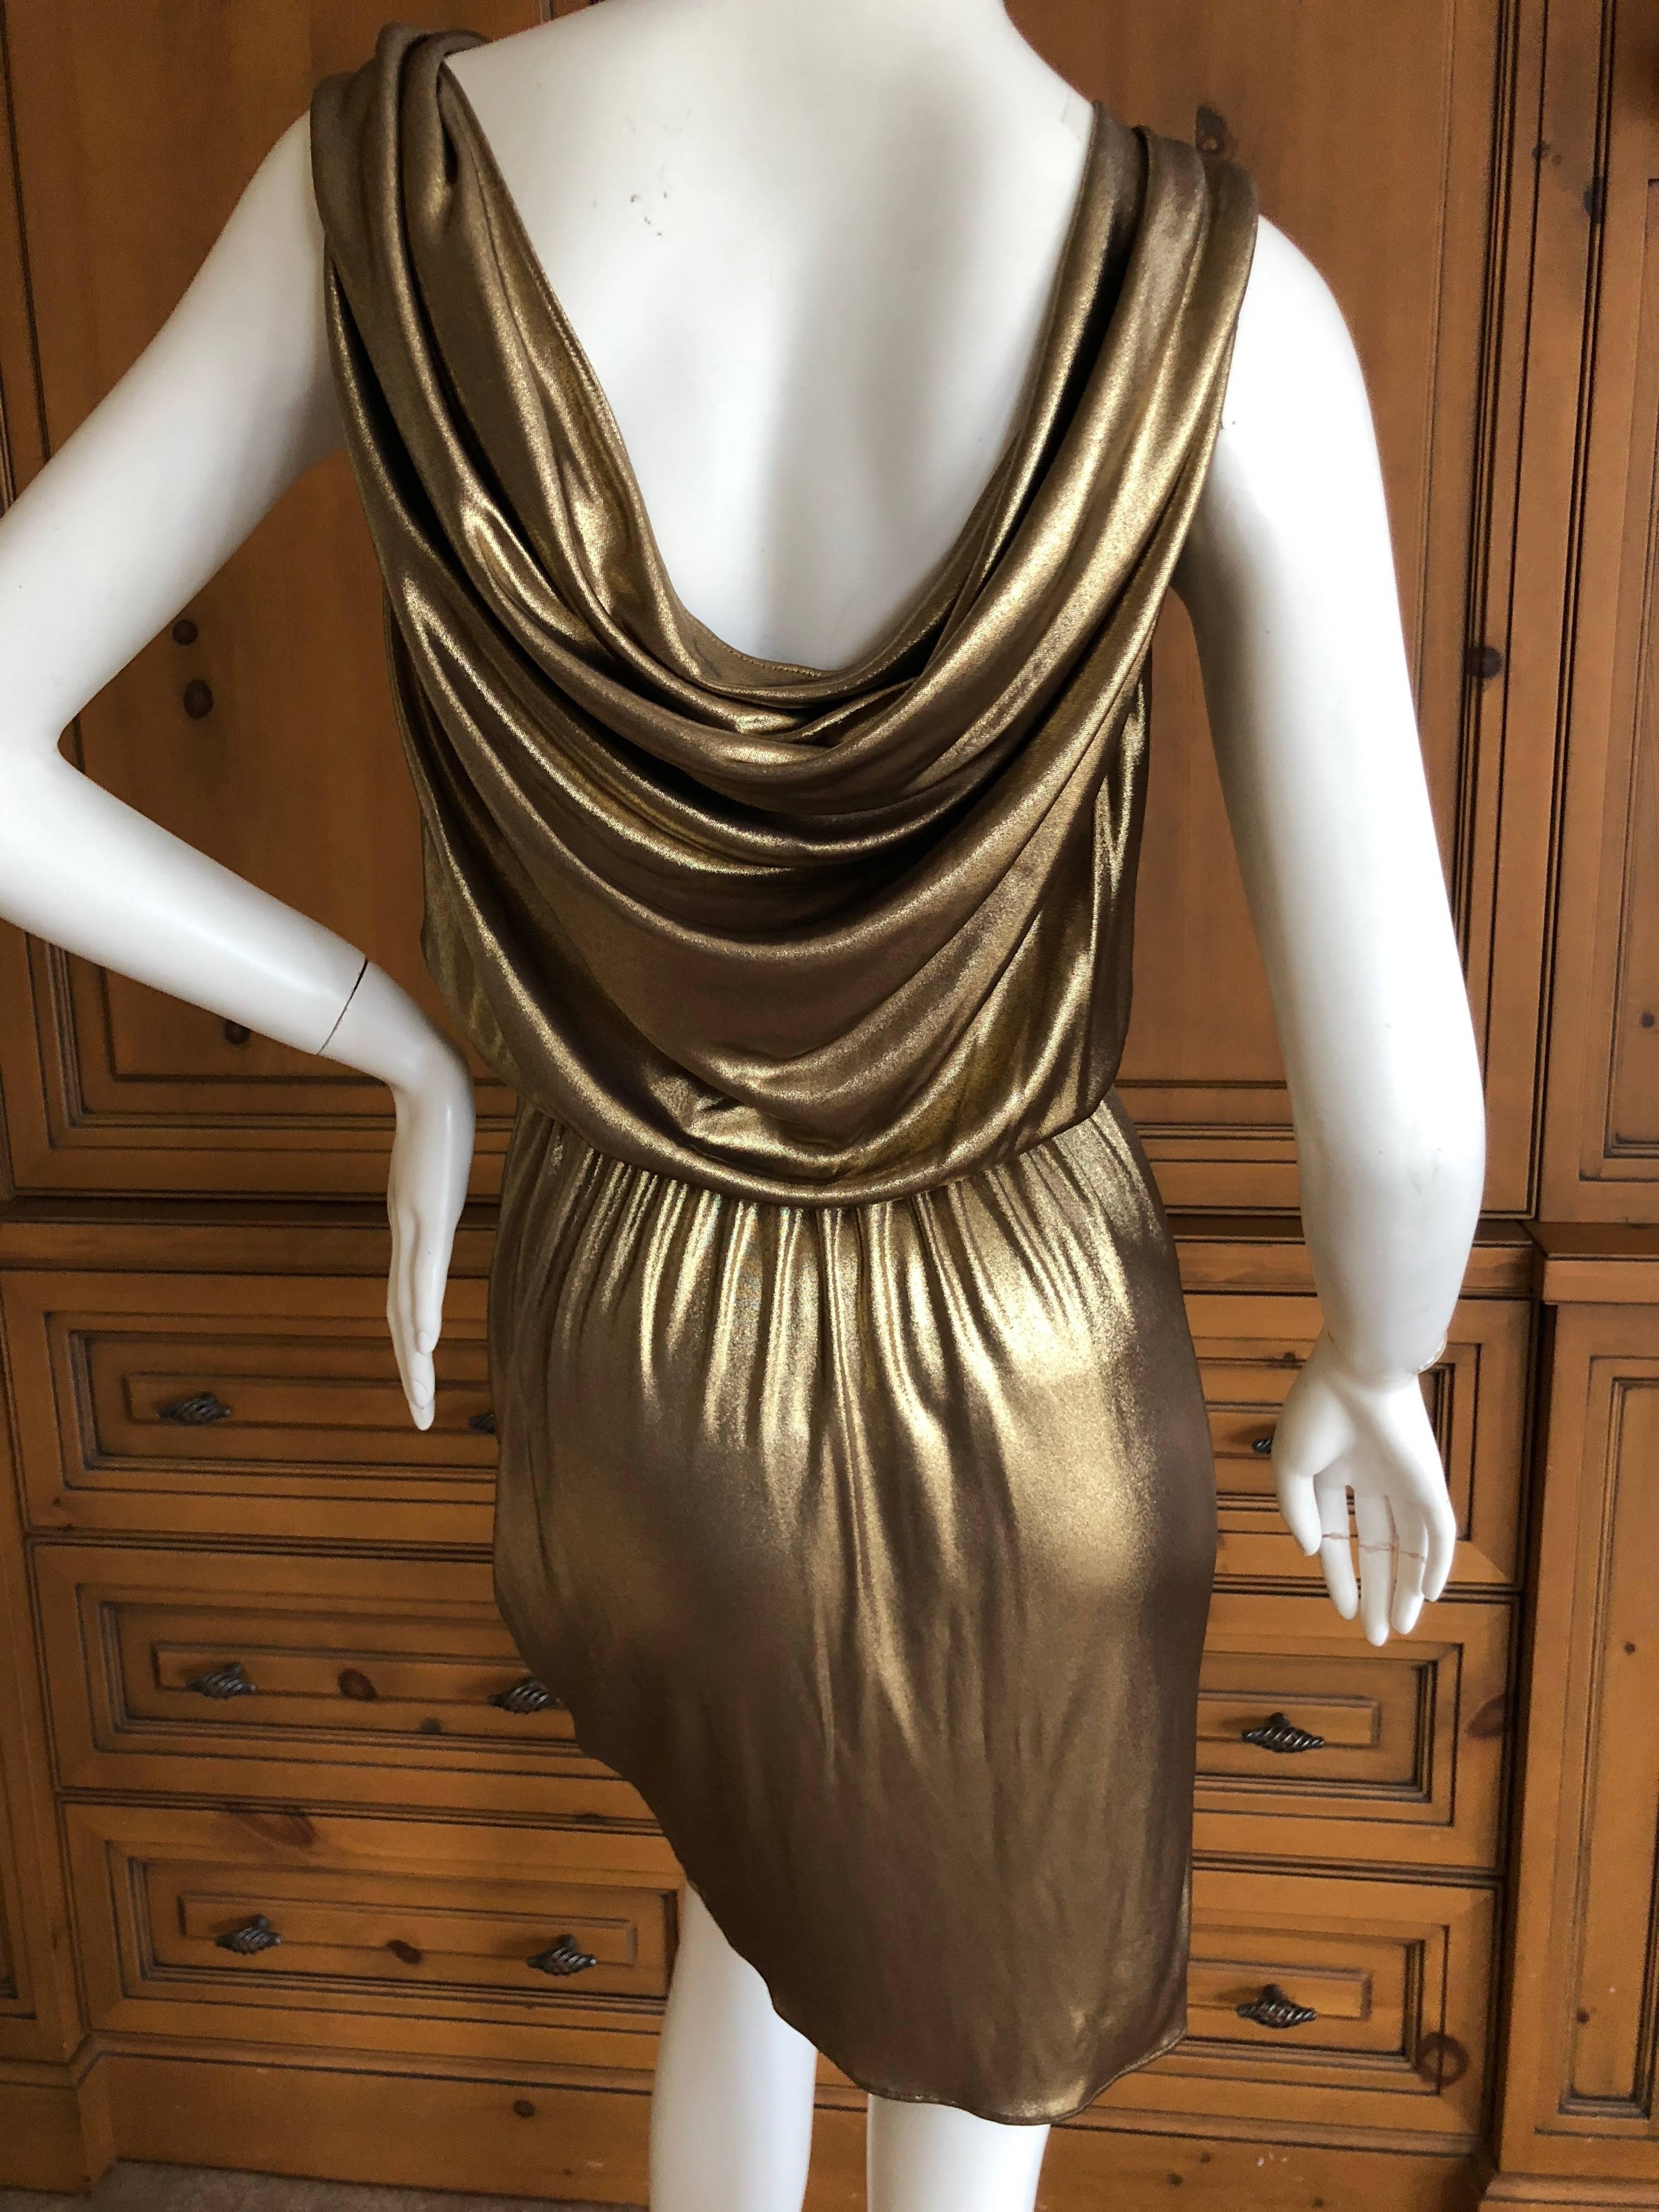 Moschino Cheap & Chic Vintage Liquid Gold Goddess Cocktail Dress.
Size 38
Bust 40